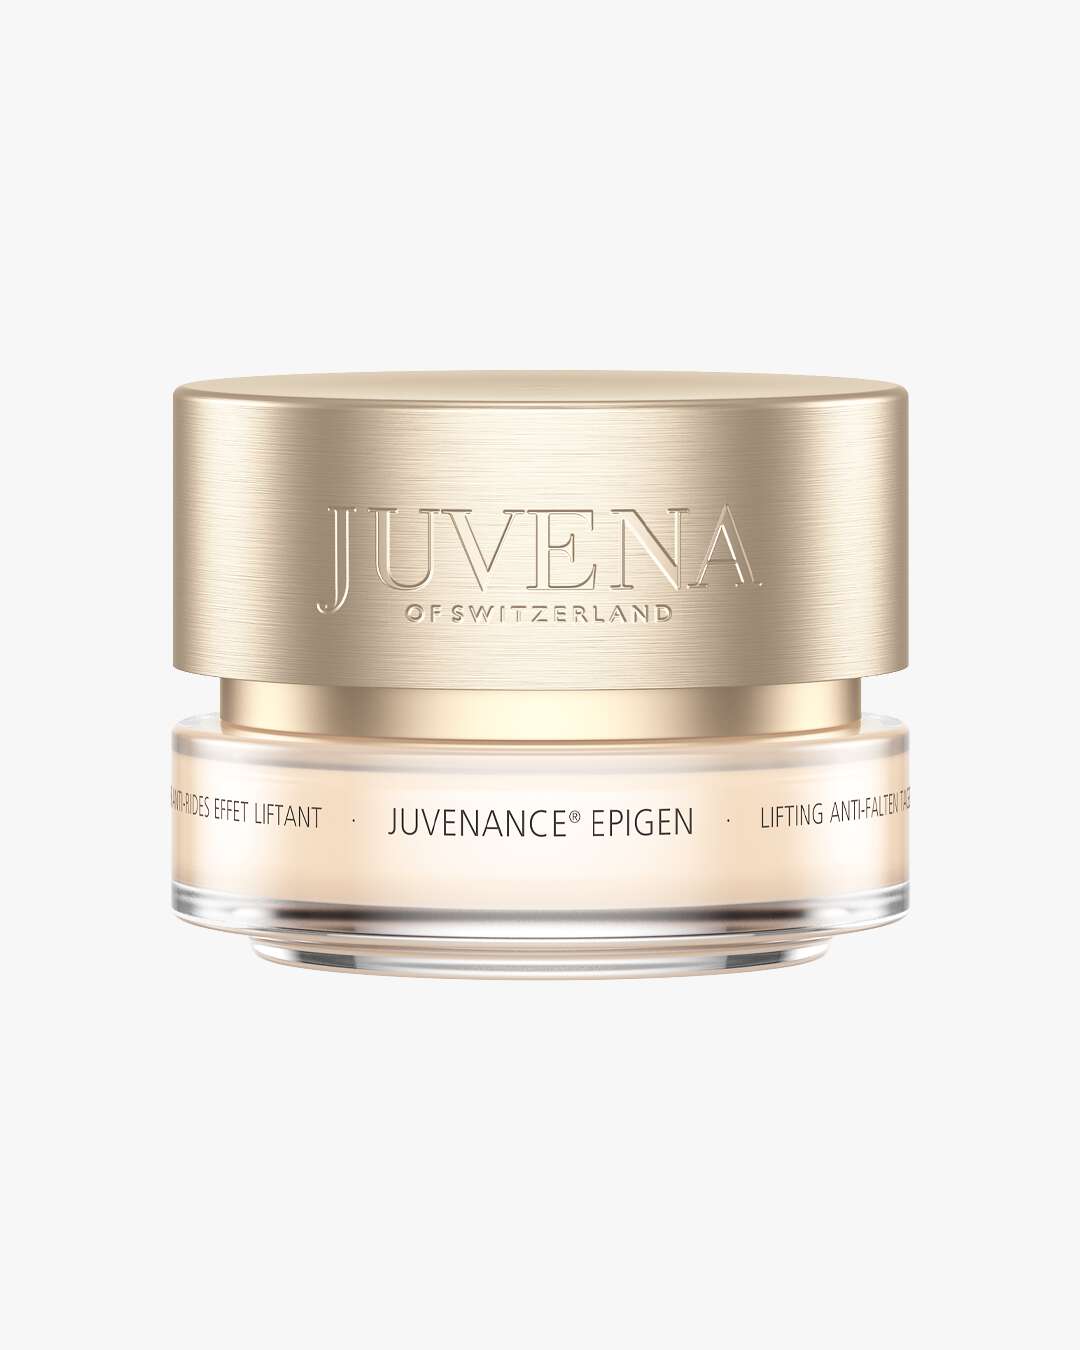 Juvenance Epigen Lifting Anti-Wrinkle Day Cream (Størrelse: 50 ML)